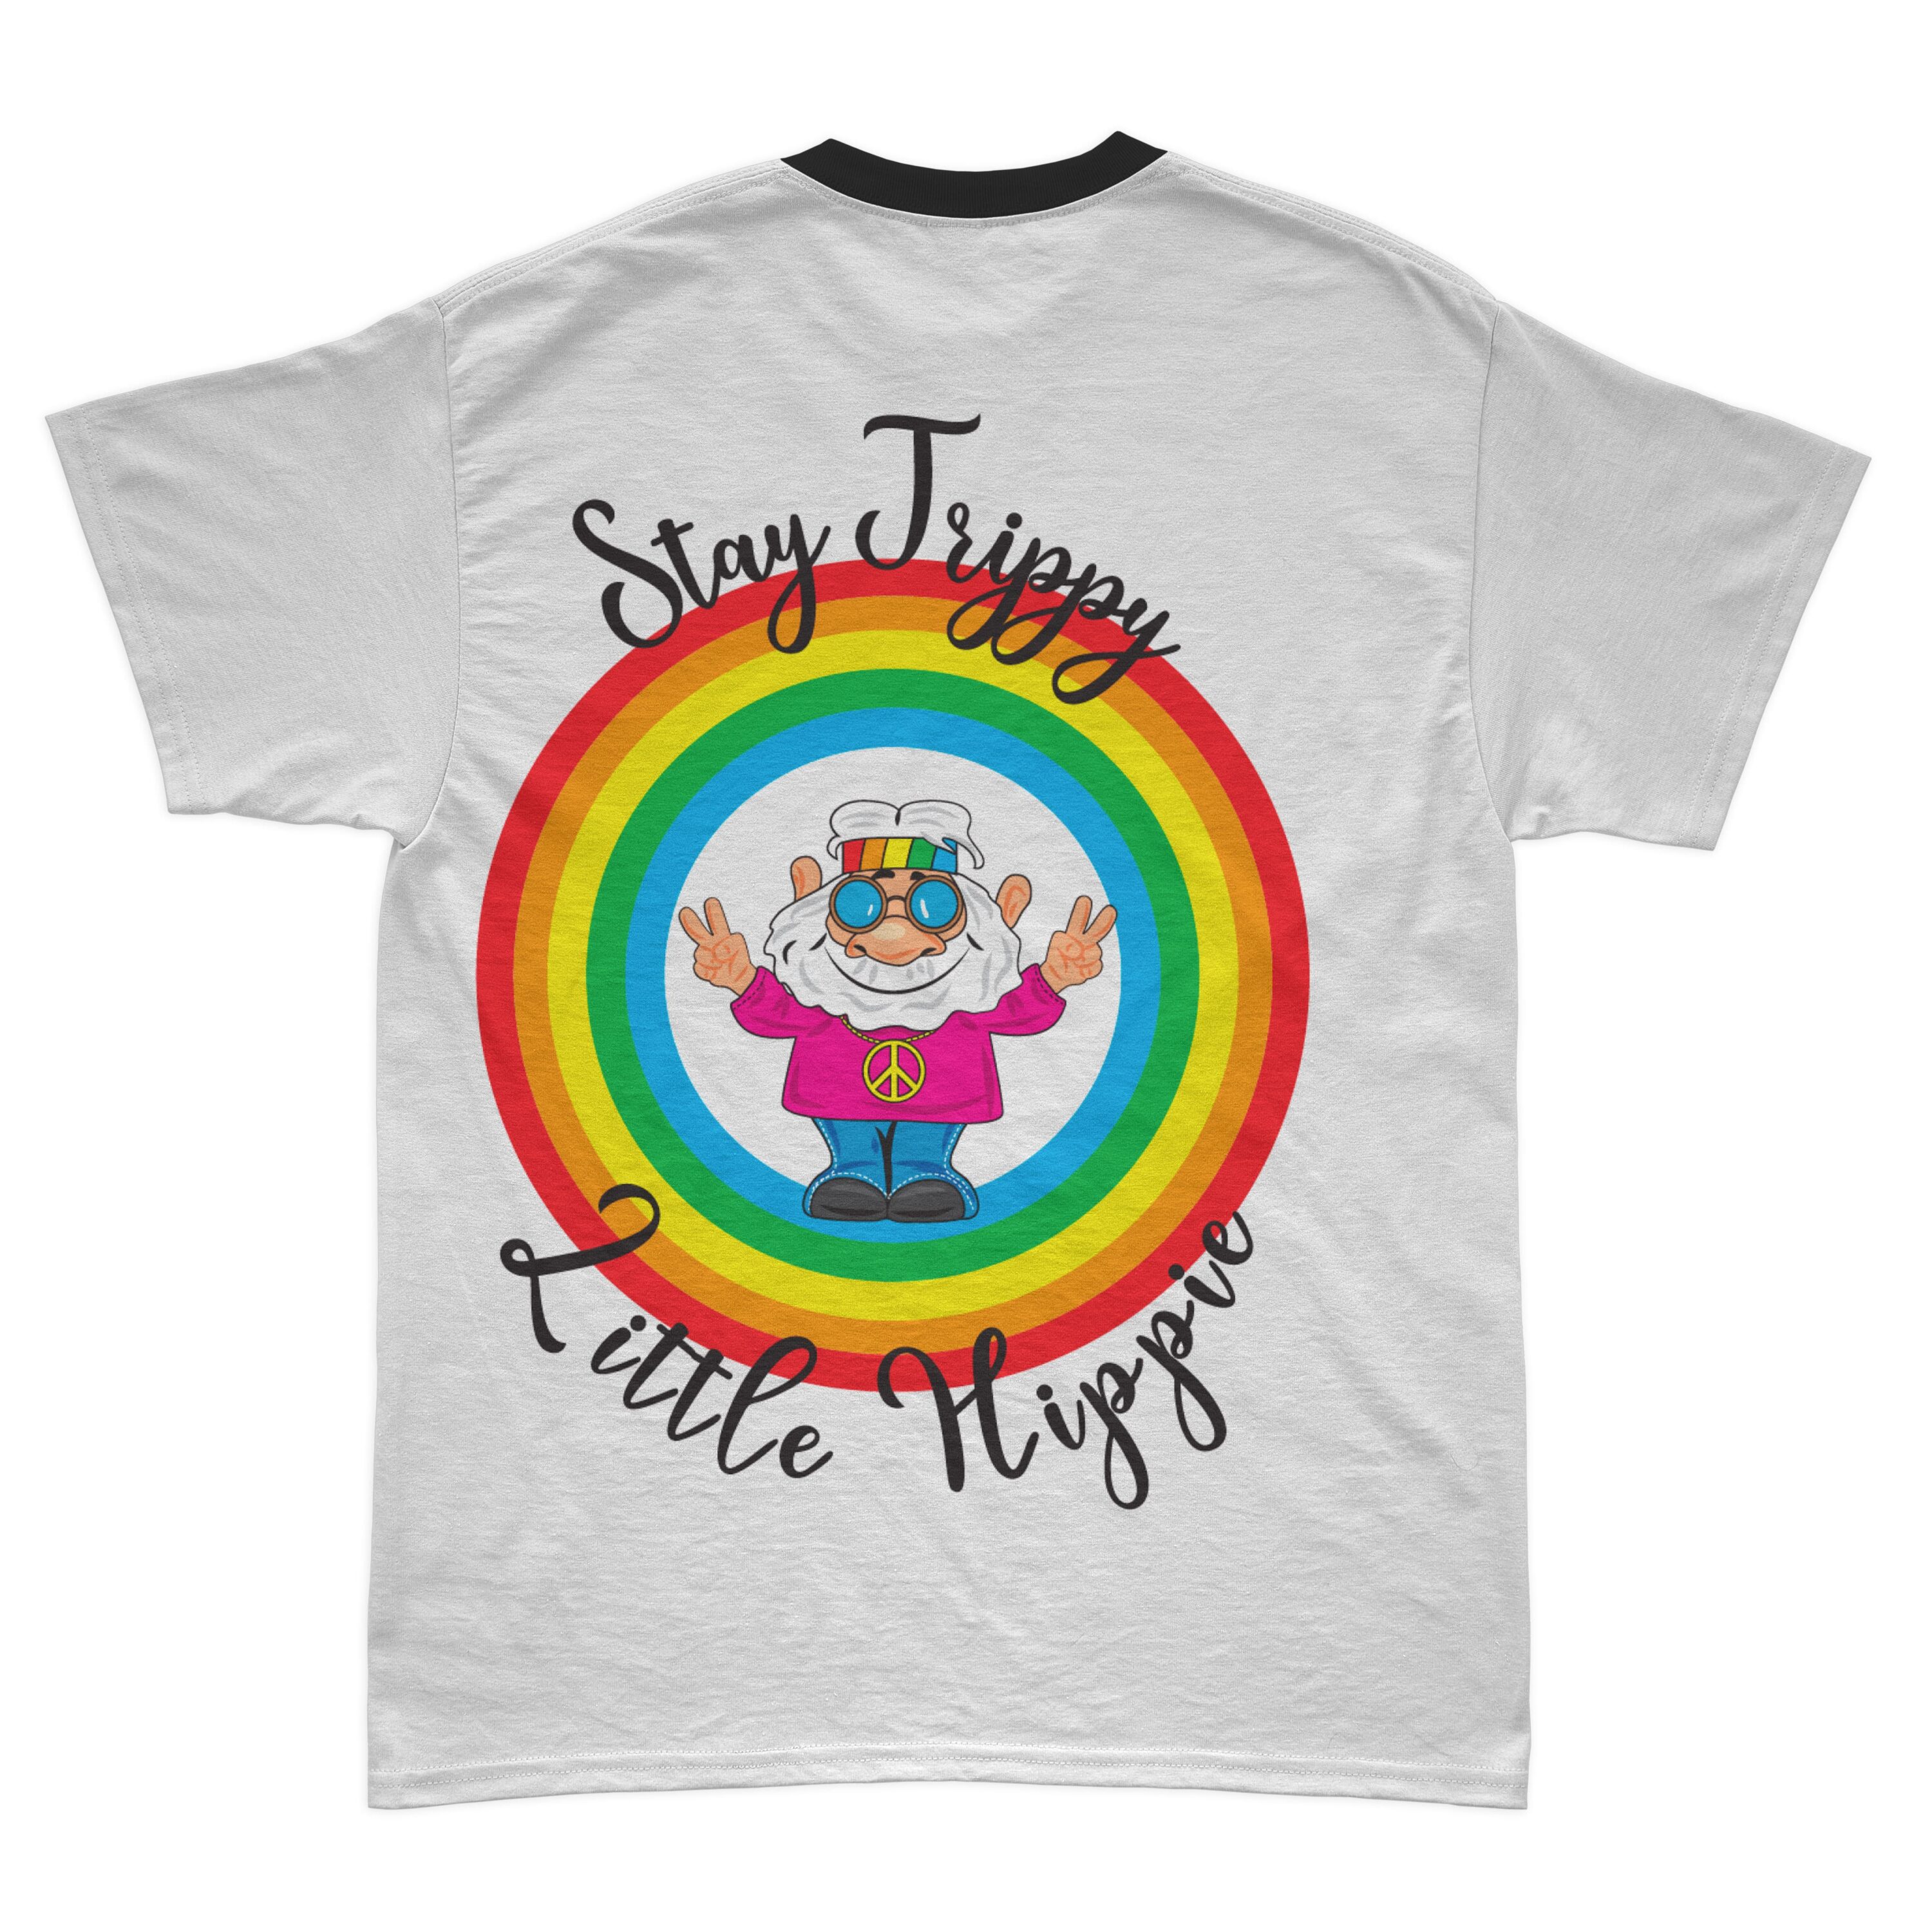 Stay trippy little hippie with rainbow design.